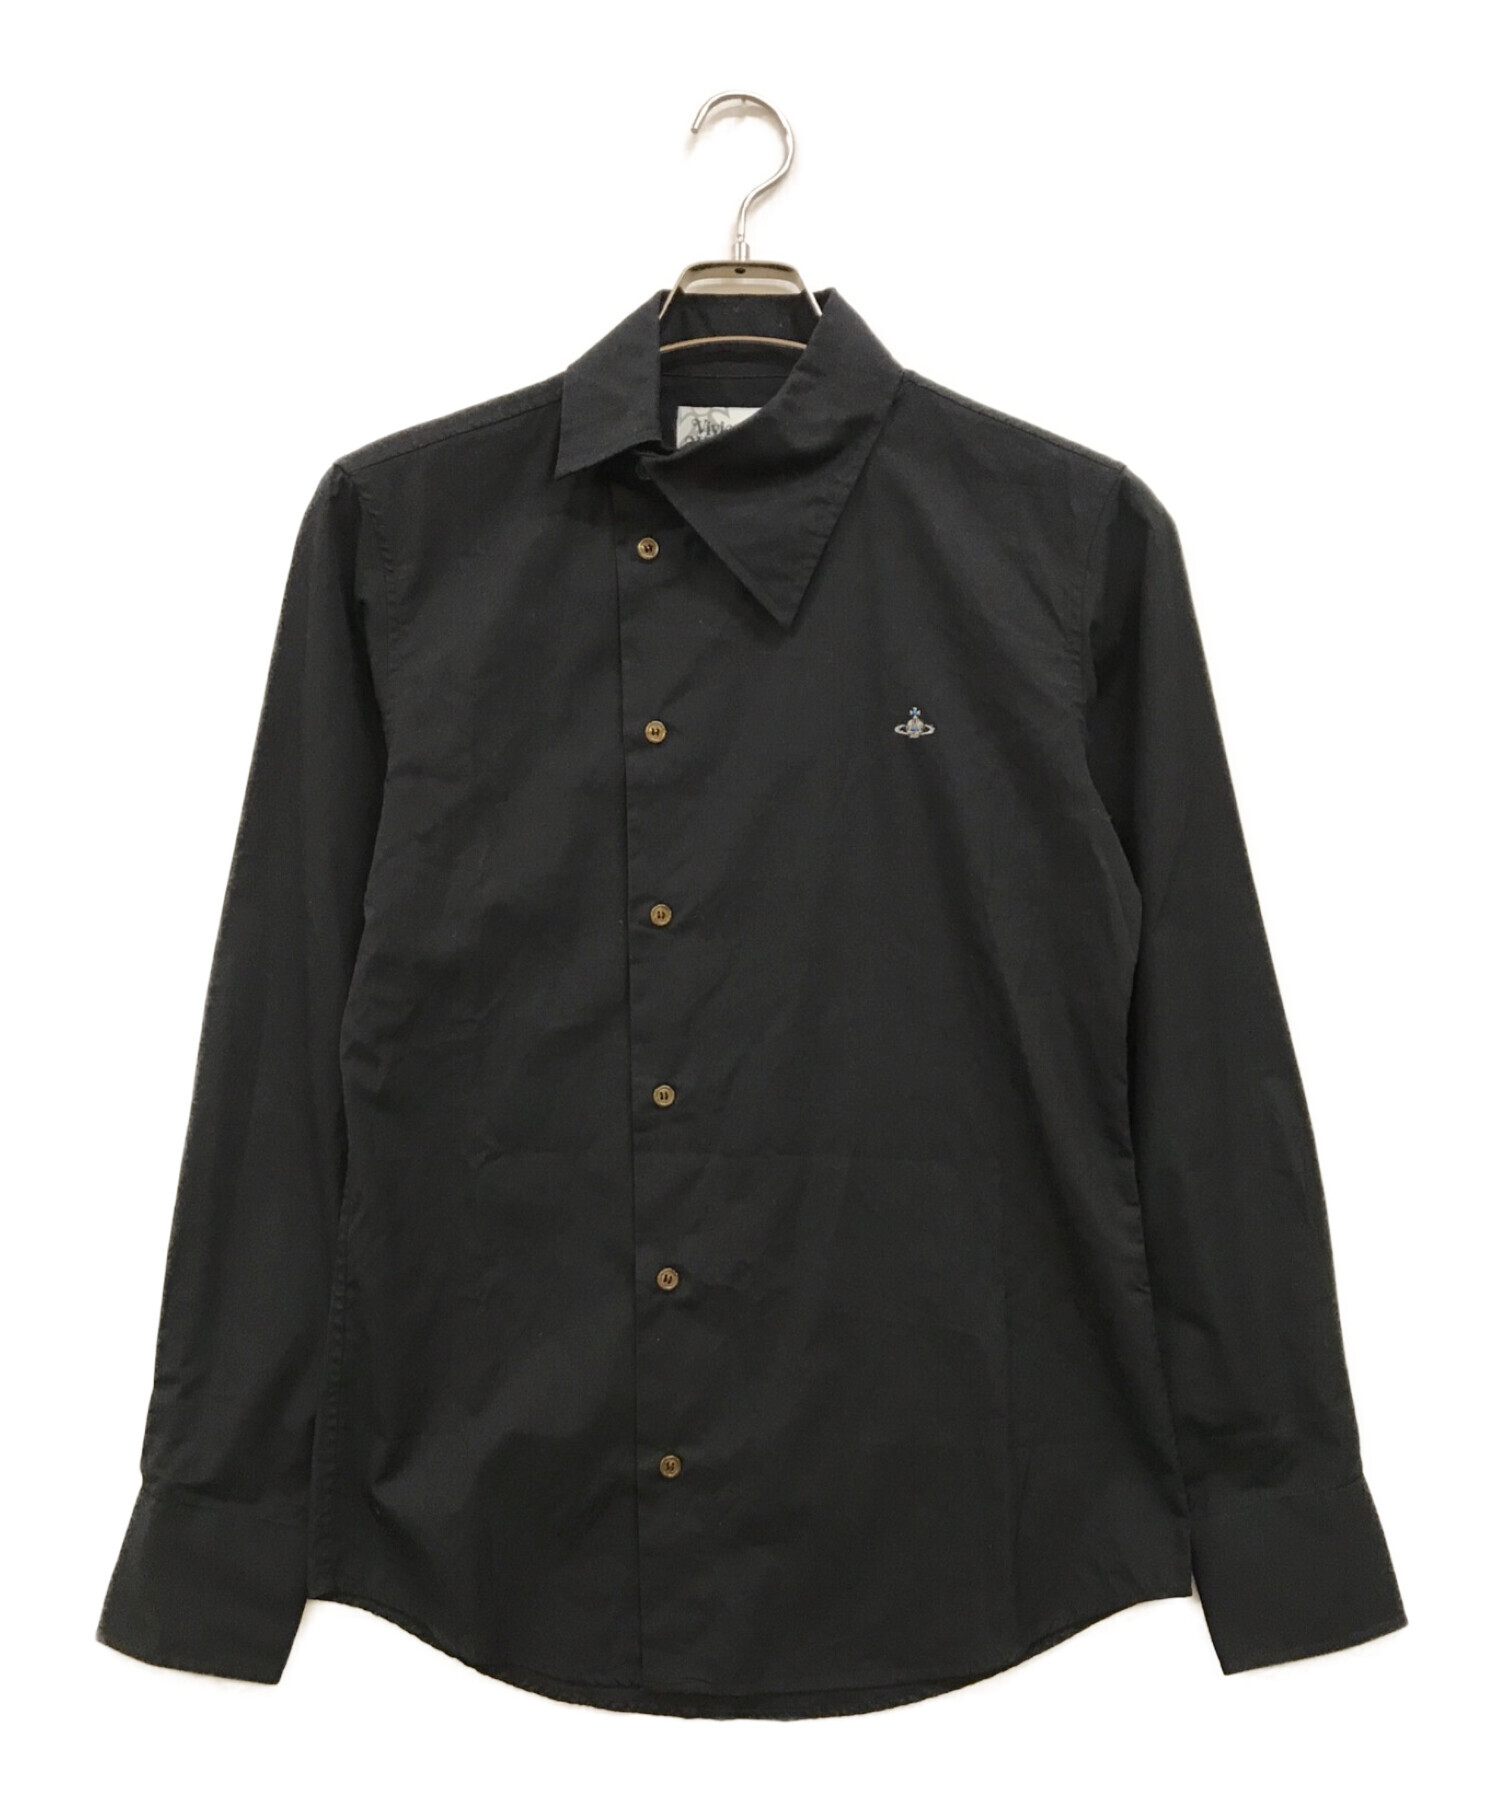 Vivienne Westwood man (ヴィヴィアン ウェストウッド マン) アシンメトリーシャツ ブラック サイズ:44